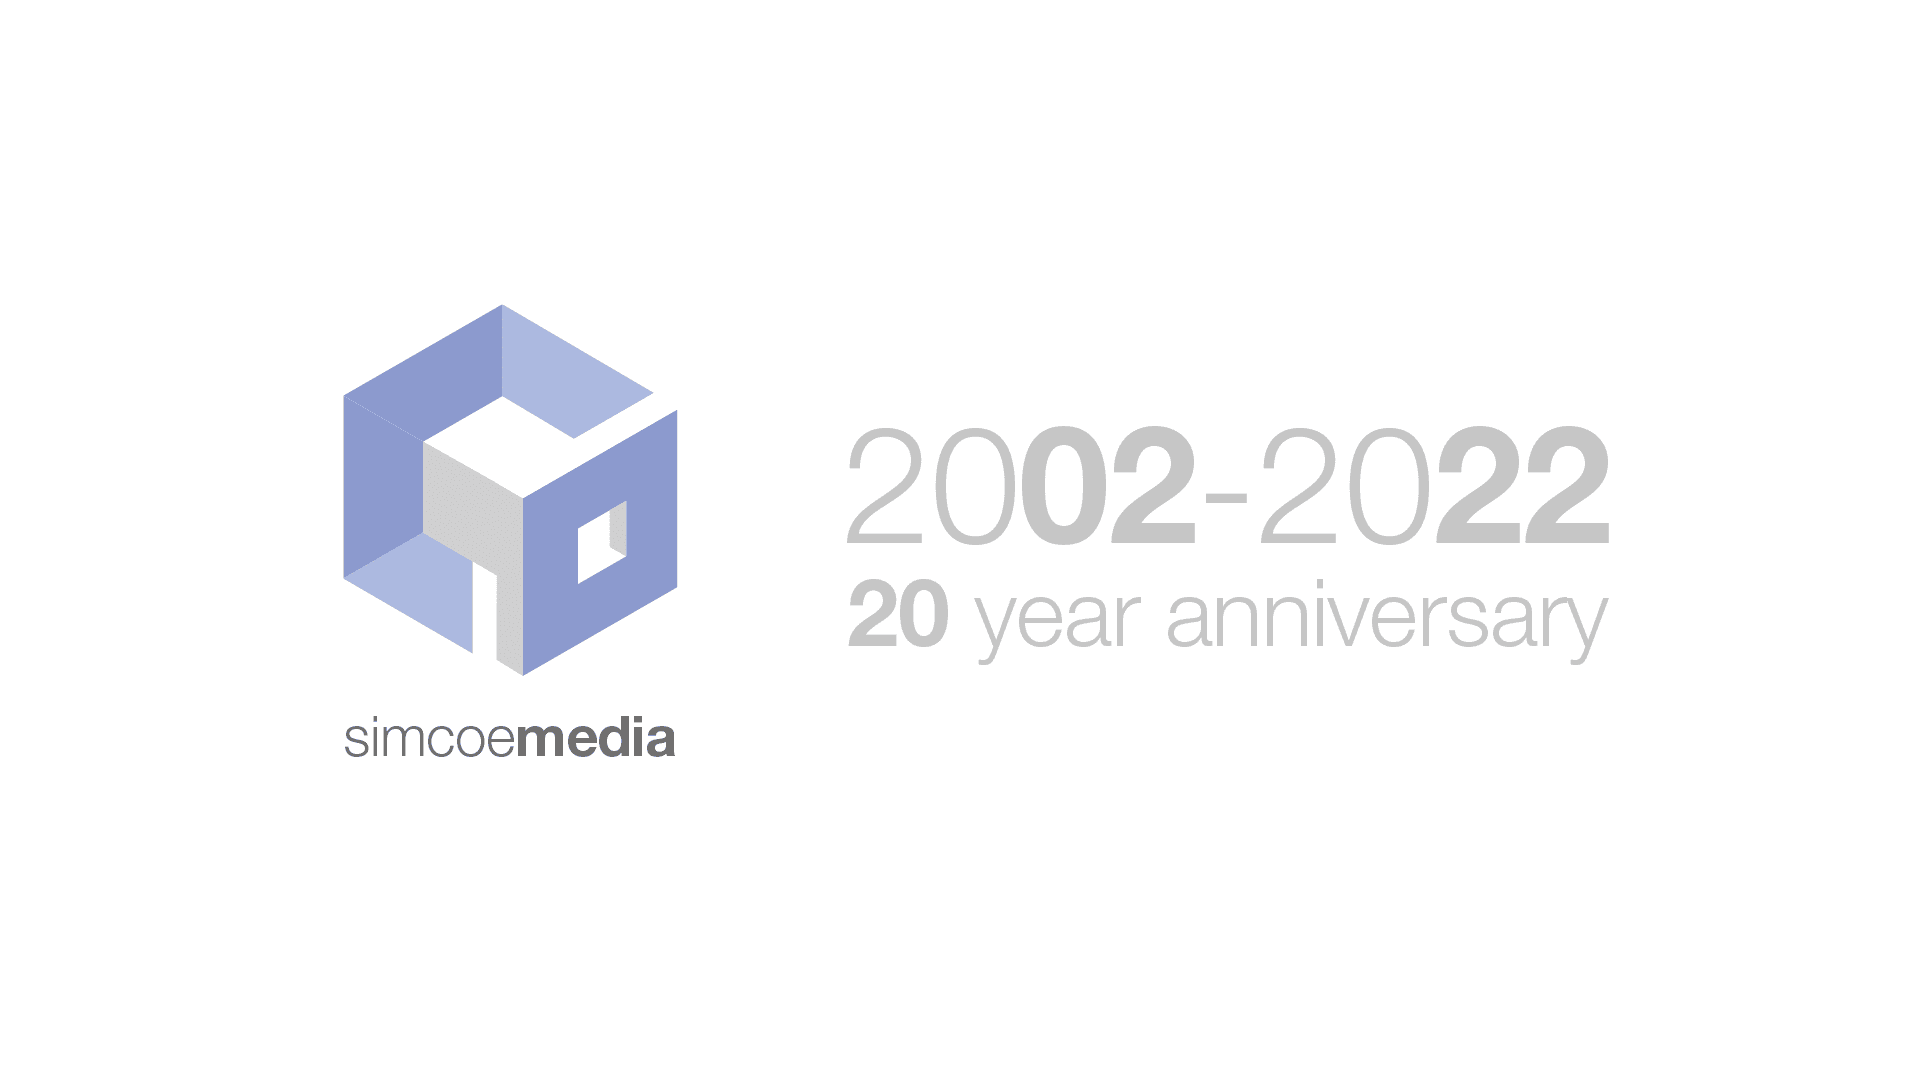 Simcoemedia Anniversary 2002 - 2022